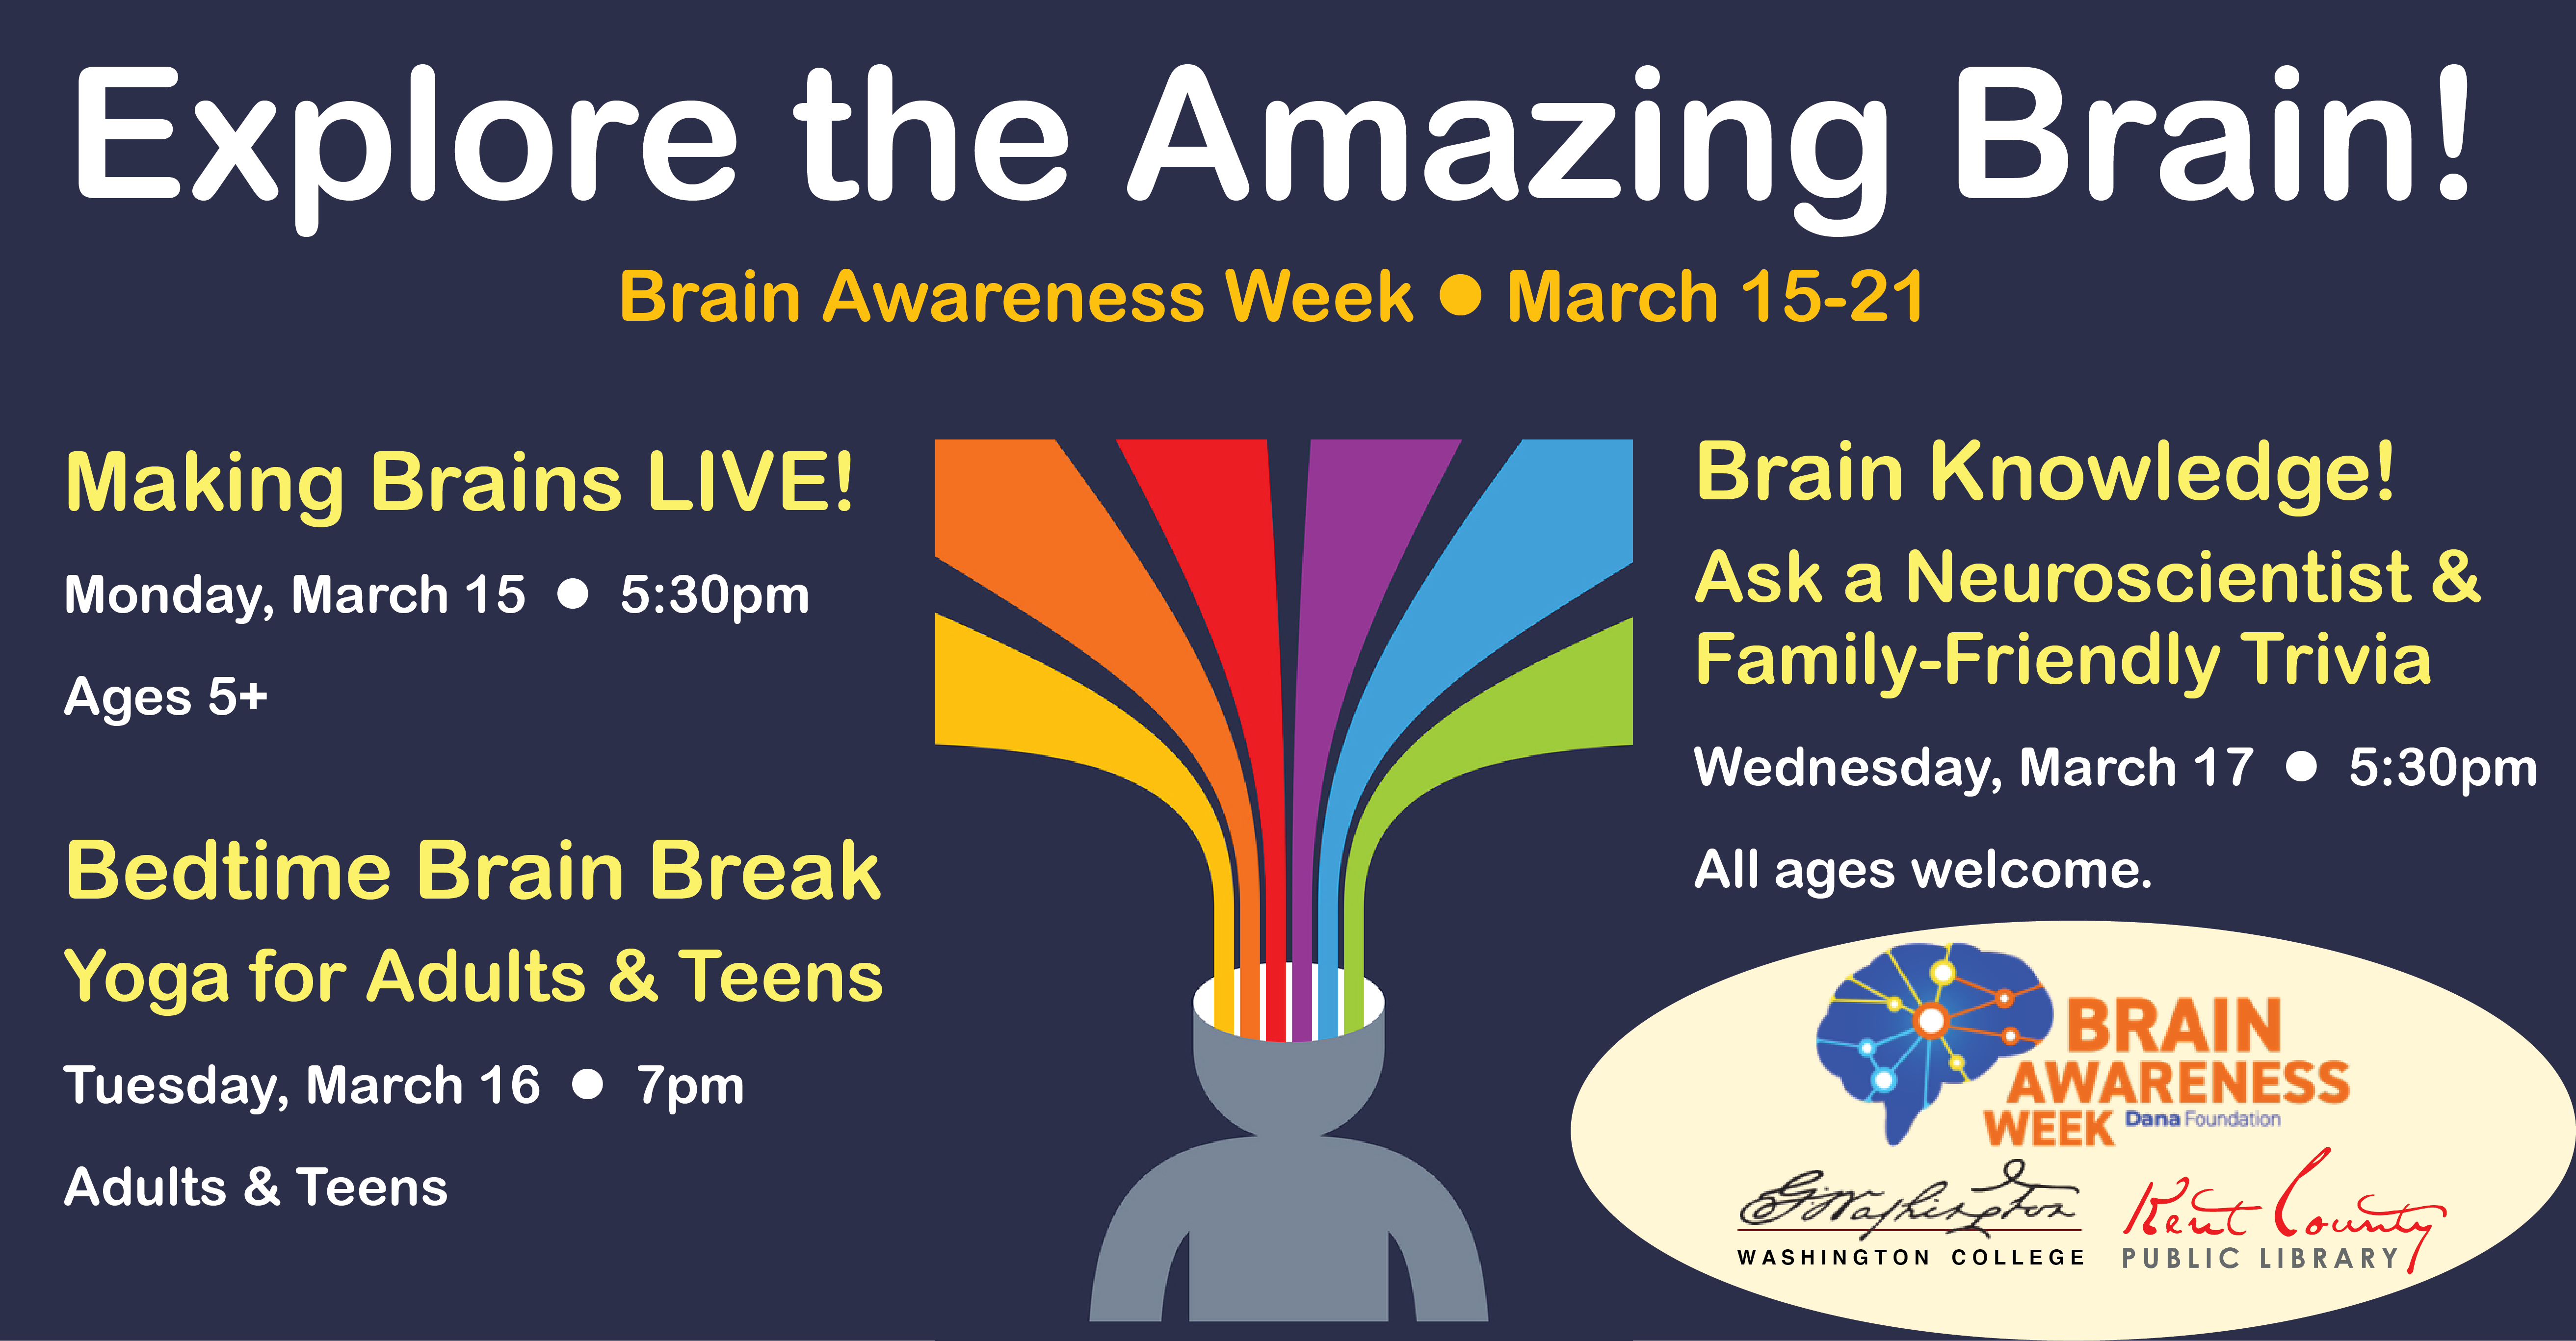 Brain Knowledge! Ask a Neuroscientist & Family-Friendly Trivia Online